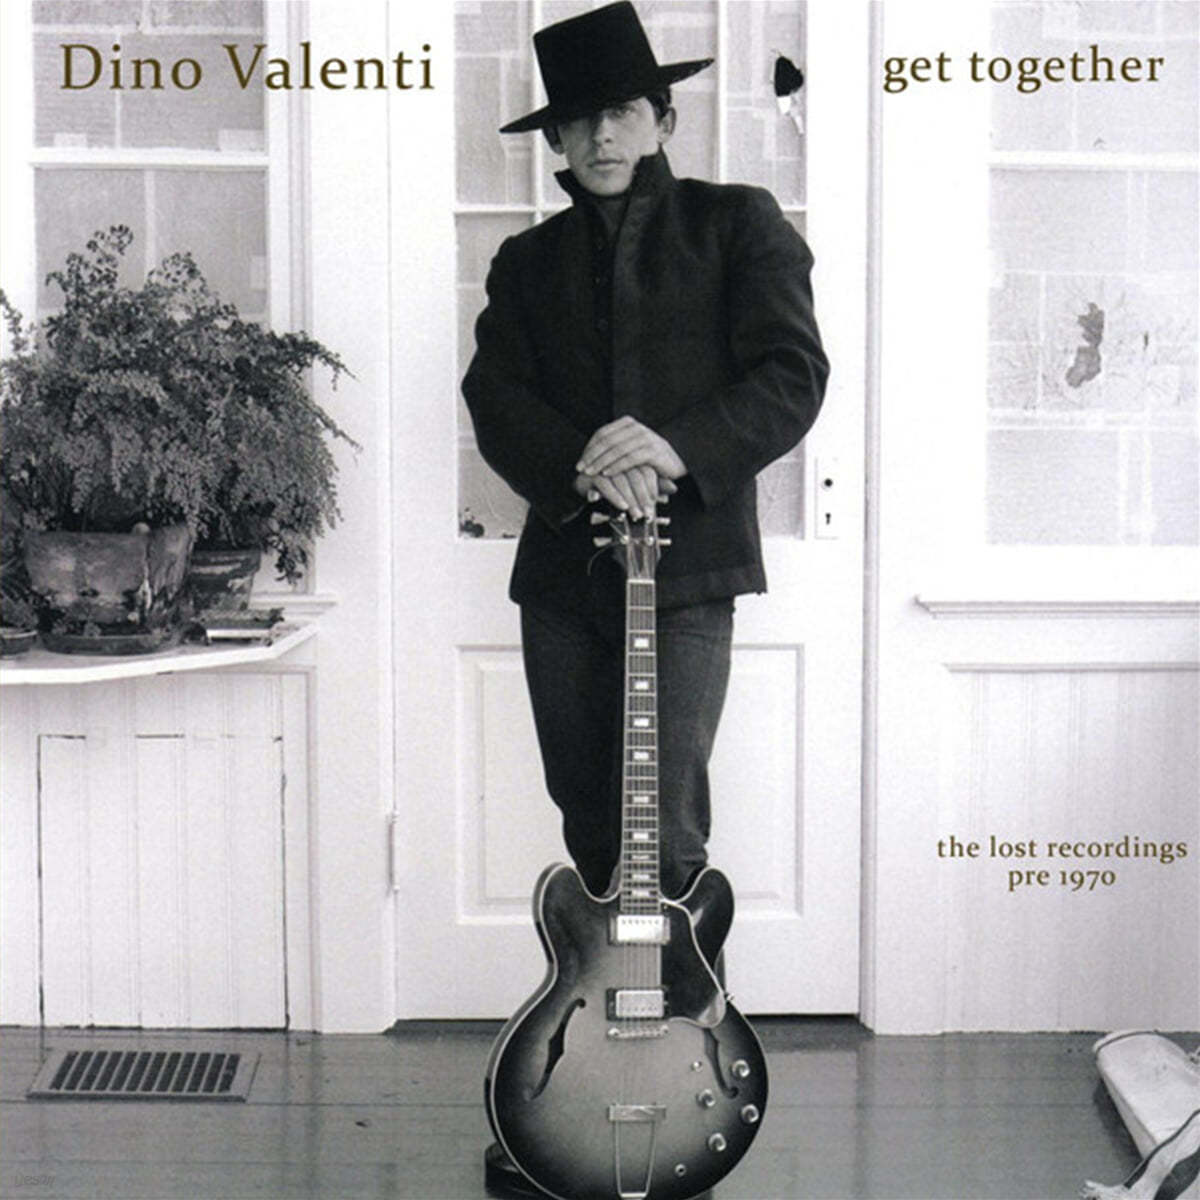 Dino Valenti (디노 발렌티) - Get Together (the lost recordings pre-1070) [2LP]